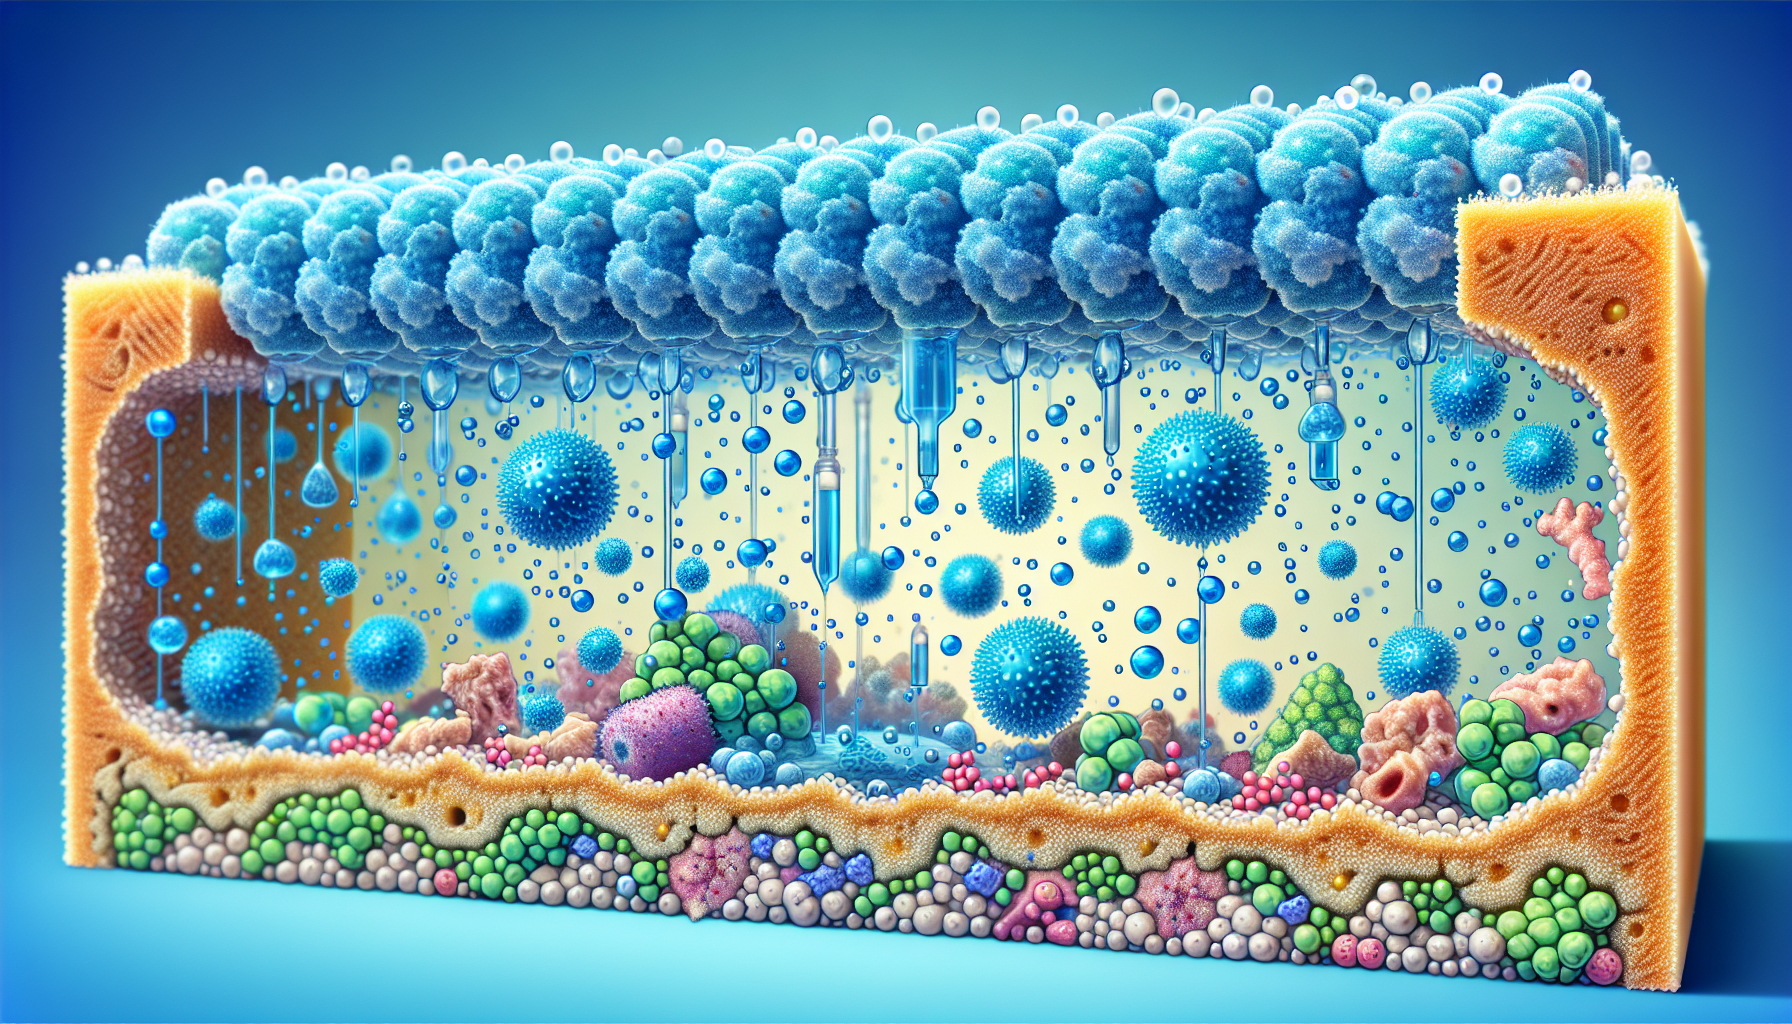 Illustration of reverse osmosis membrane